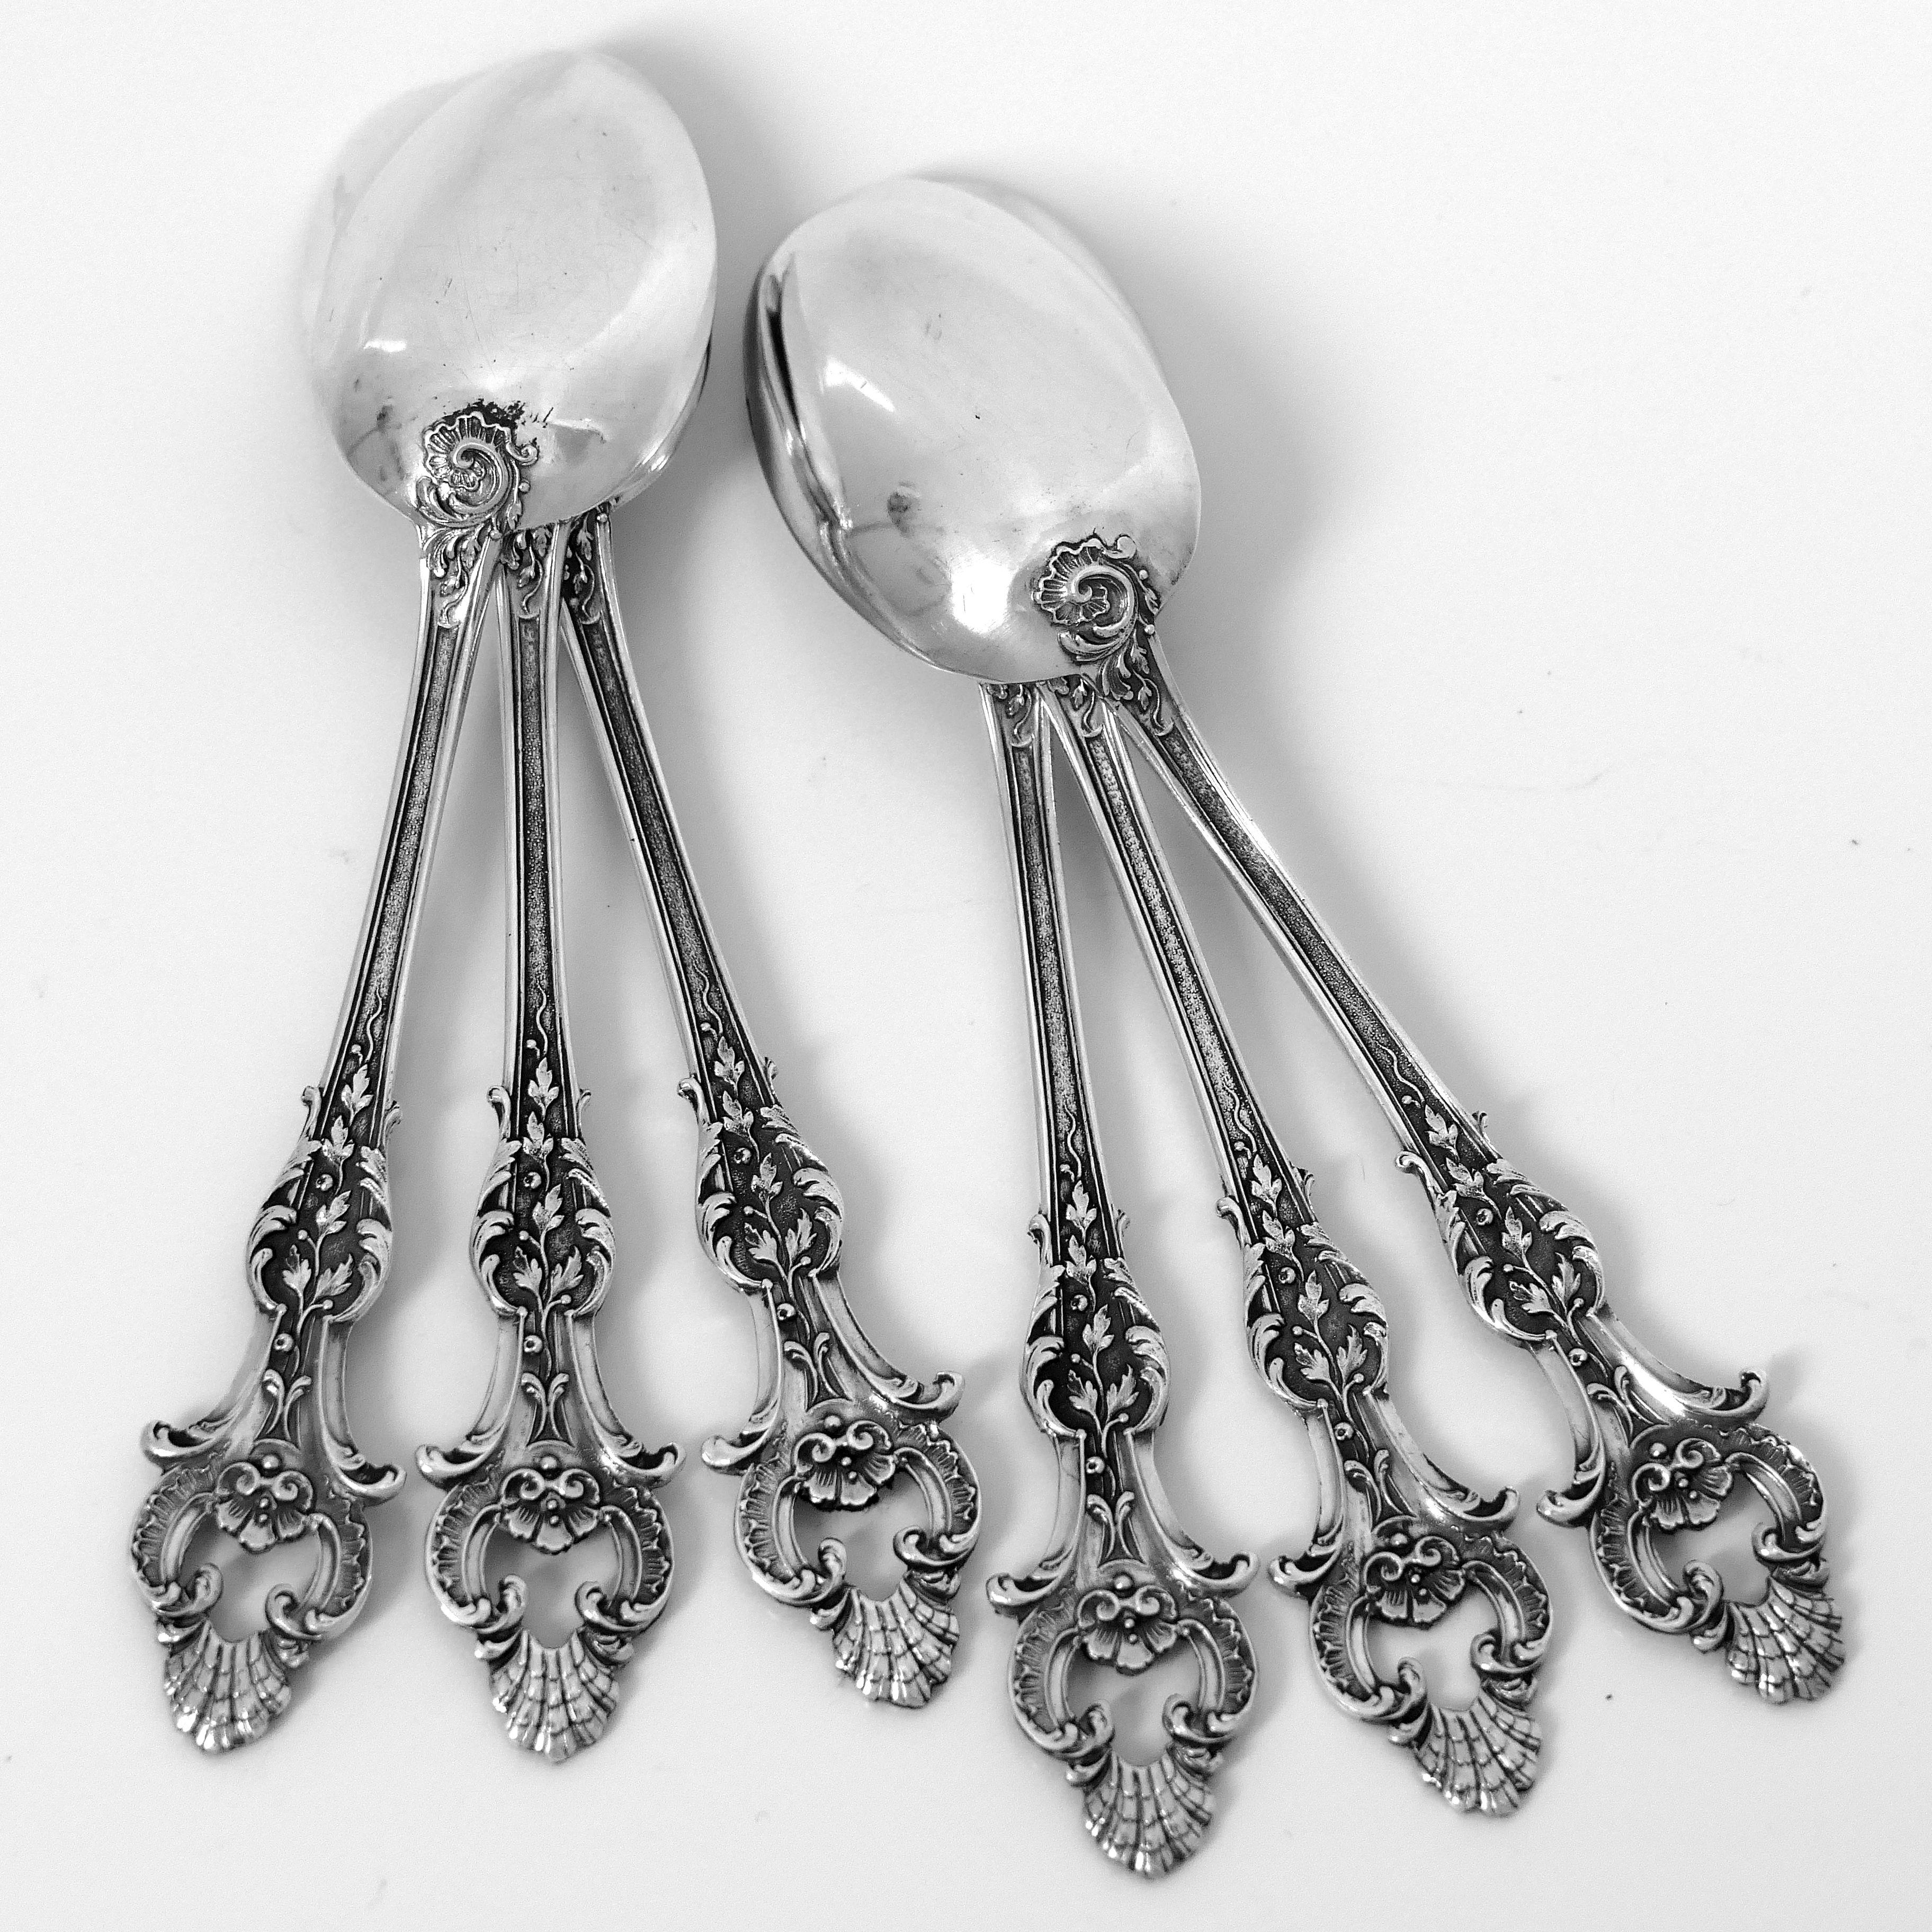 Art Deco Antique French Sterling Silver Moka Espresso Spoons Set, 6 Piece